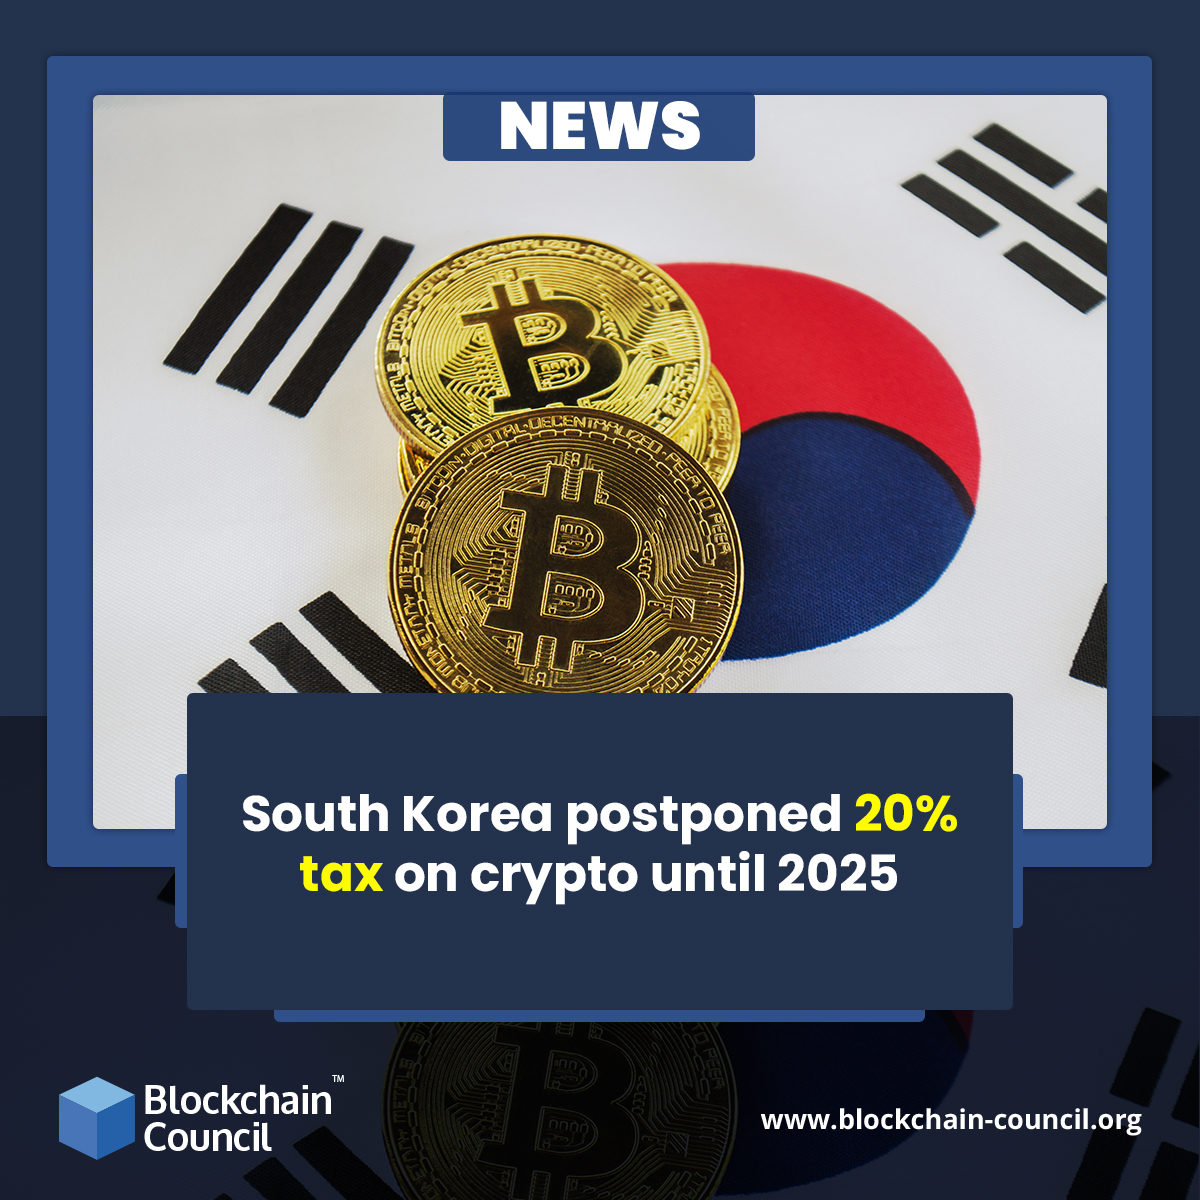 South Korea postponed 20% tax on crypto until 2025